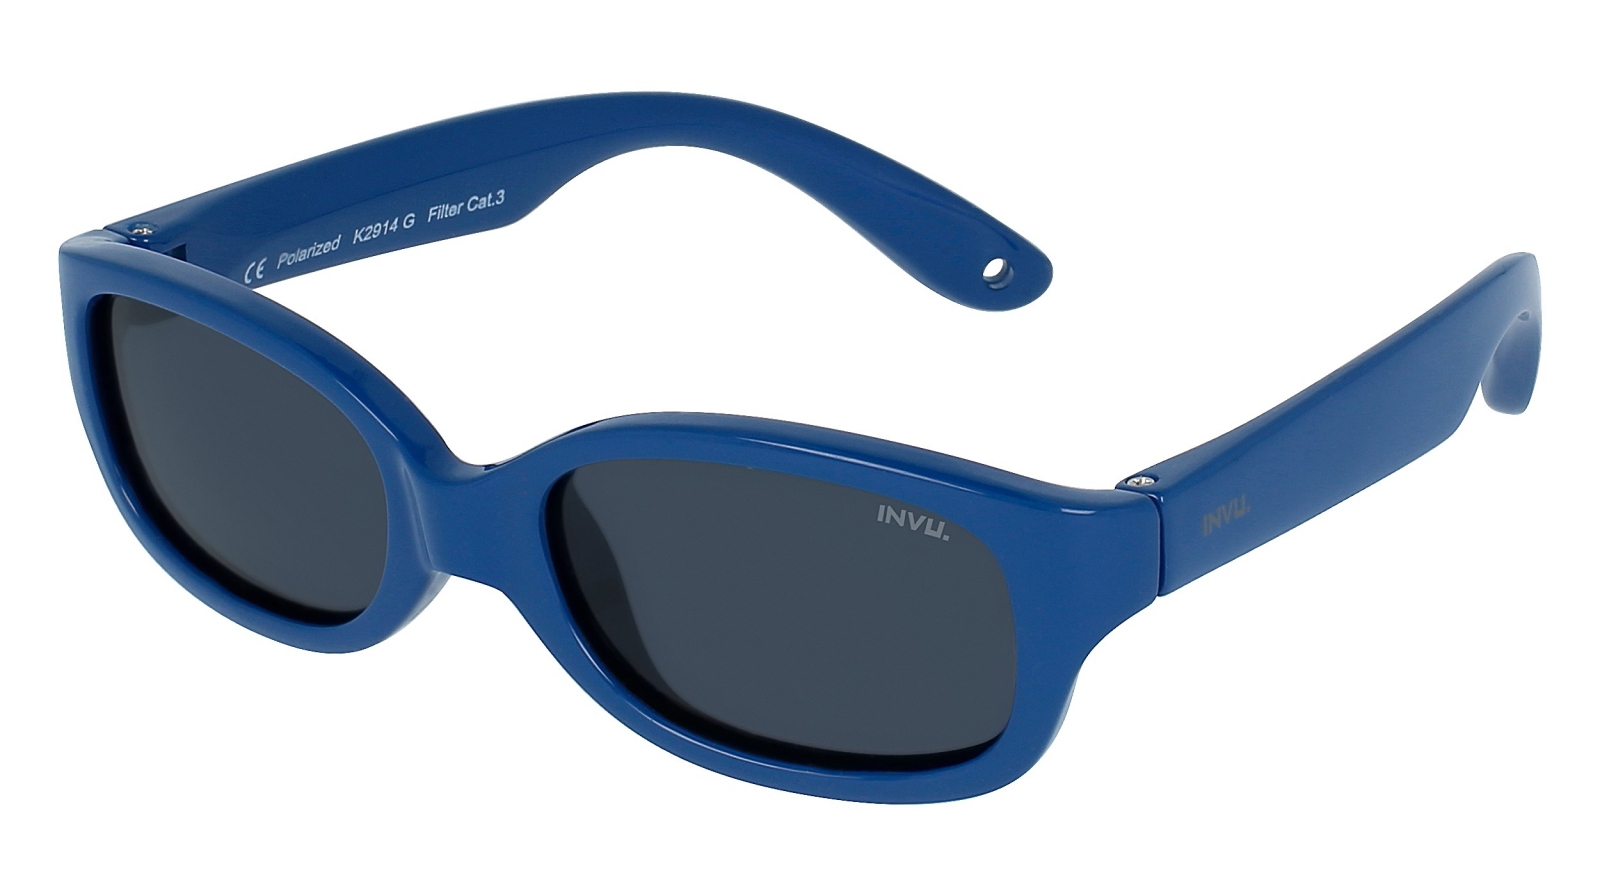 INVU. Kids K2914G - Slnečné okuliare pre deti 1-3 r.